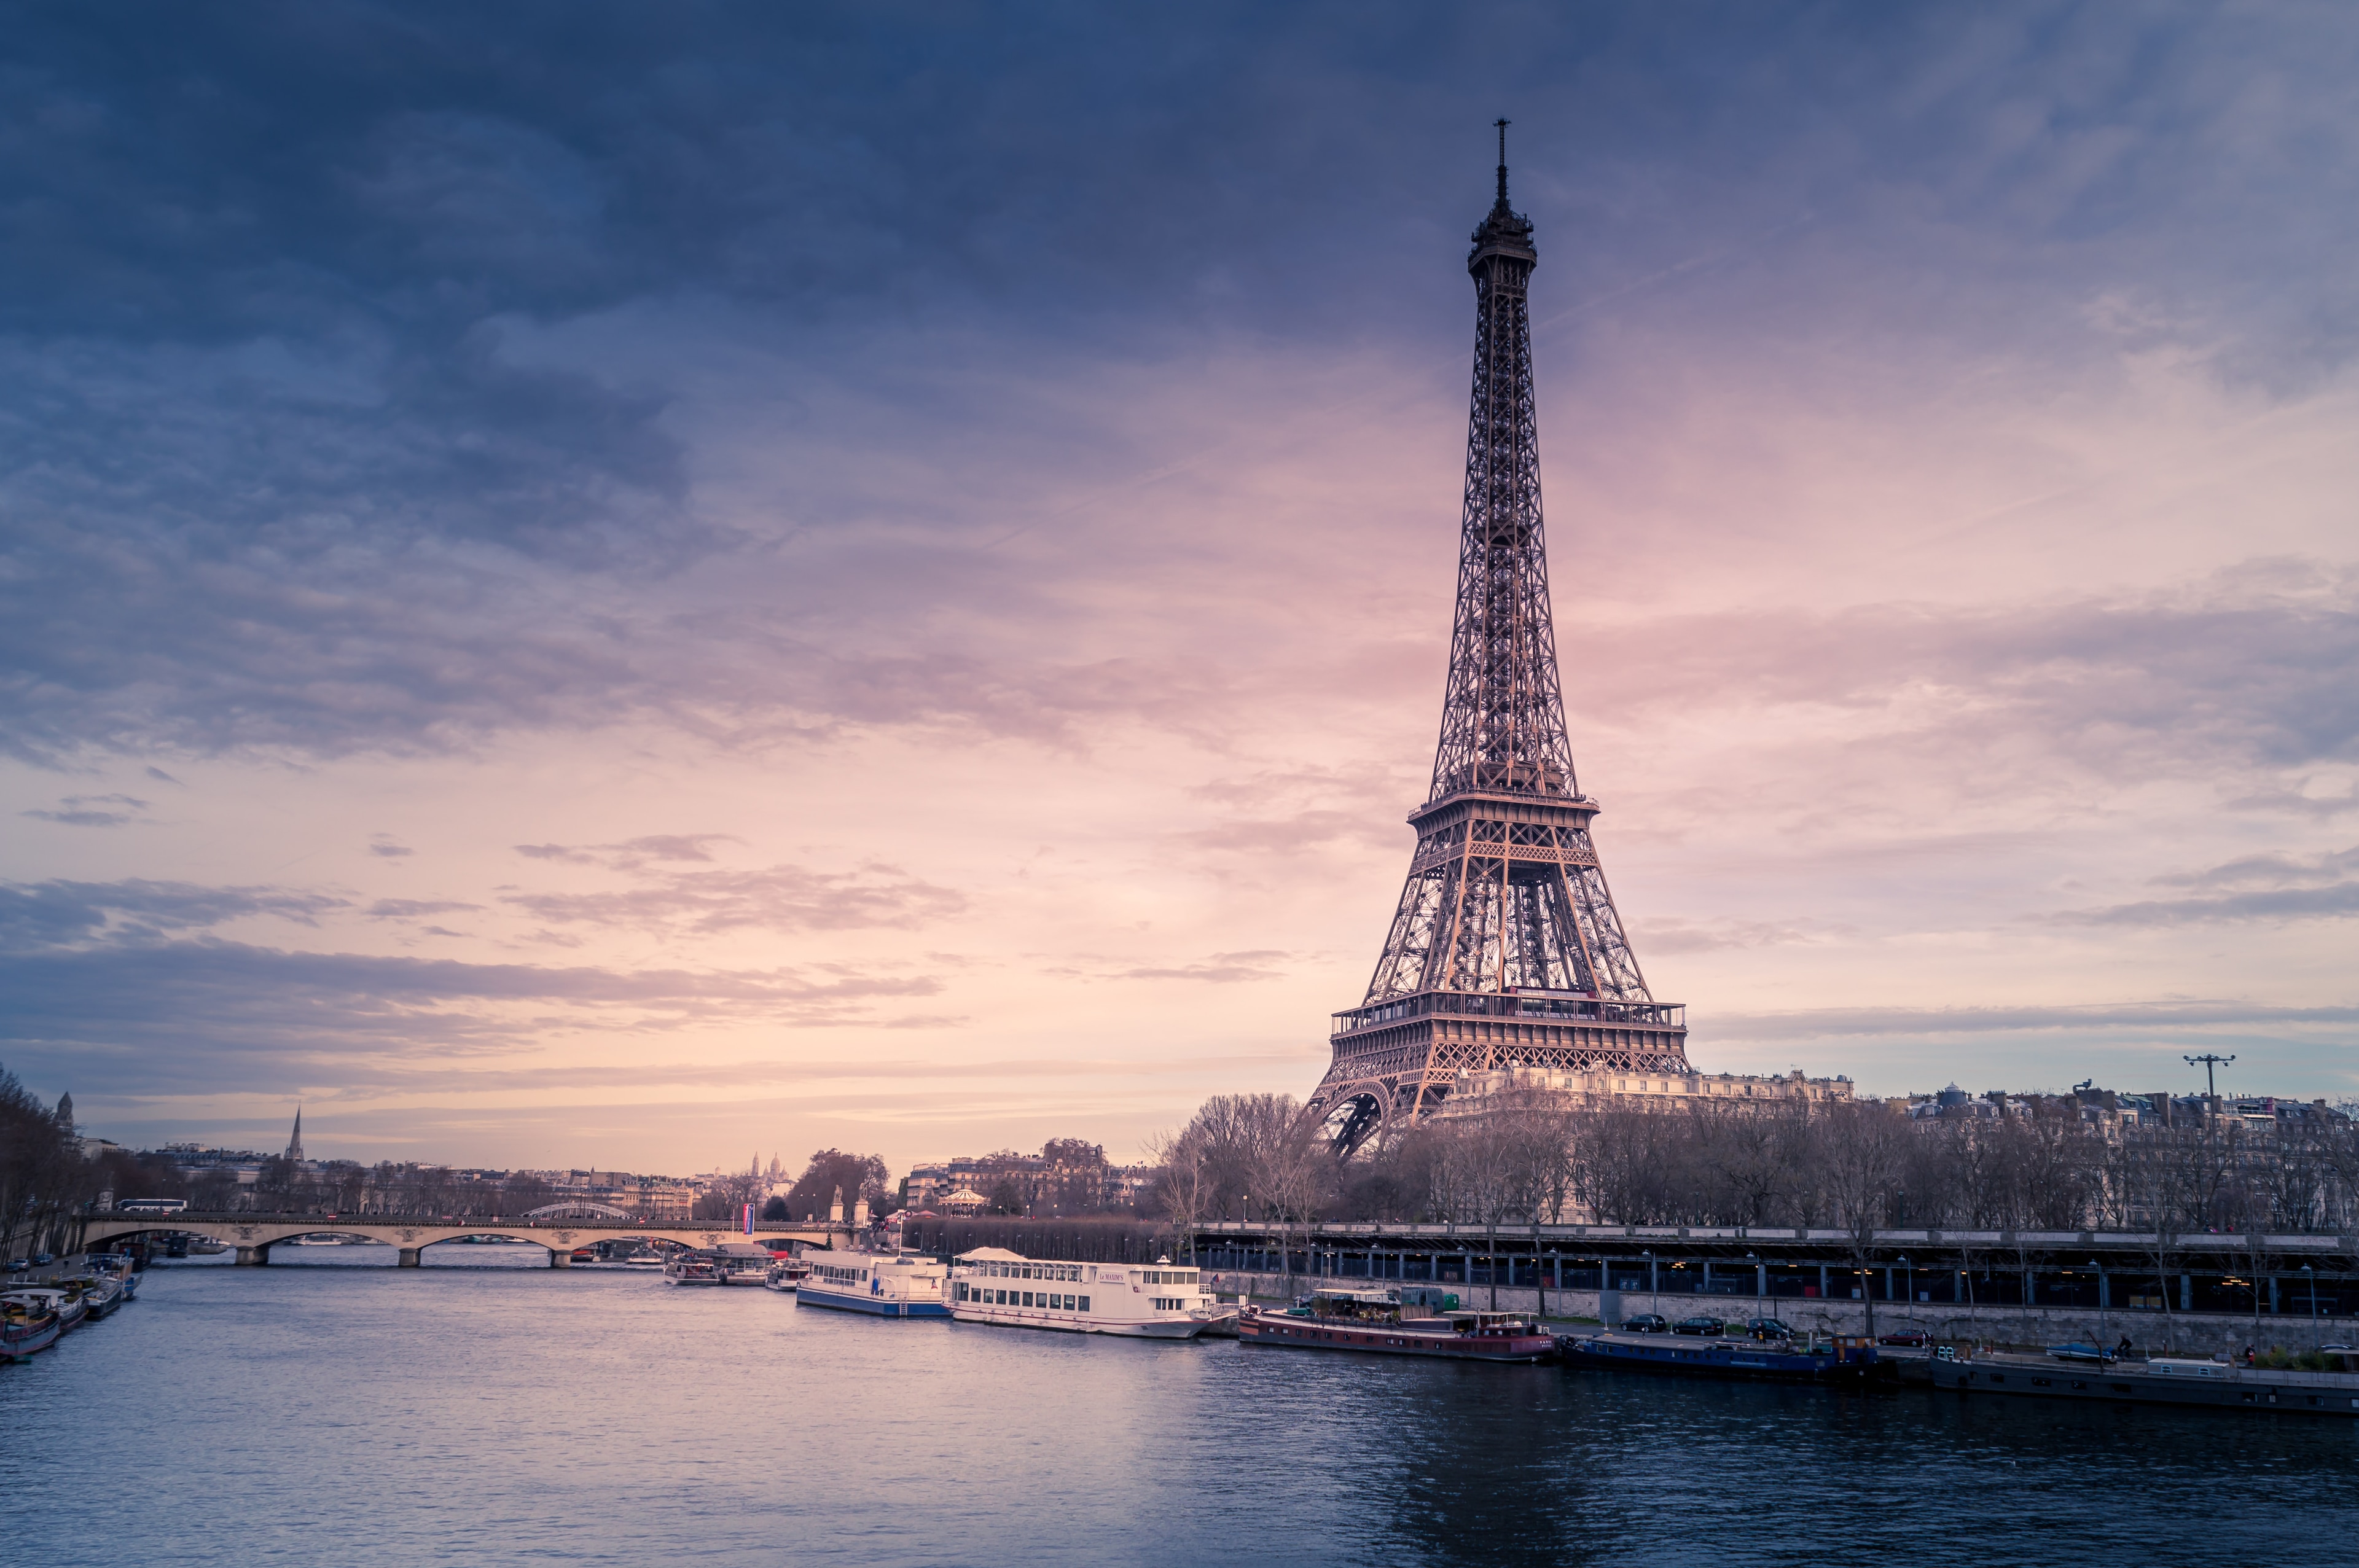 The Hopeful Traveler: Eiffel Tower Experience at the Paris Las Vegas